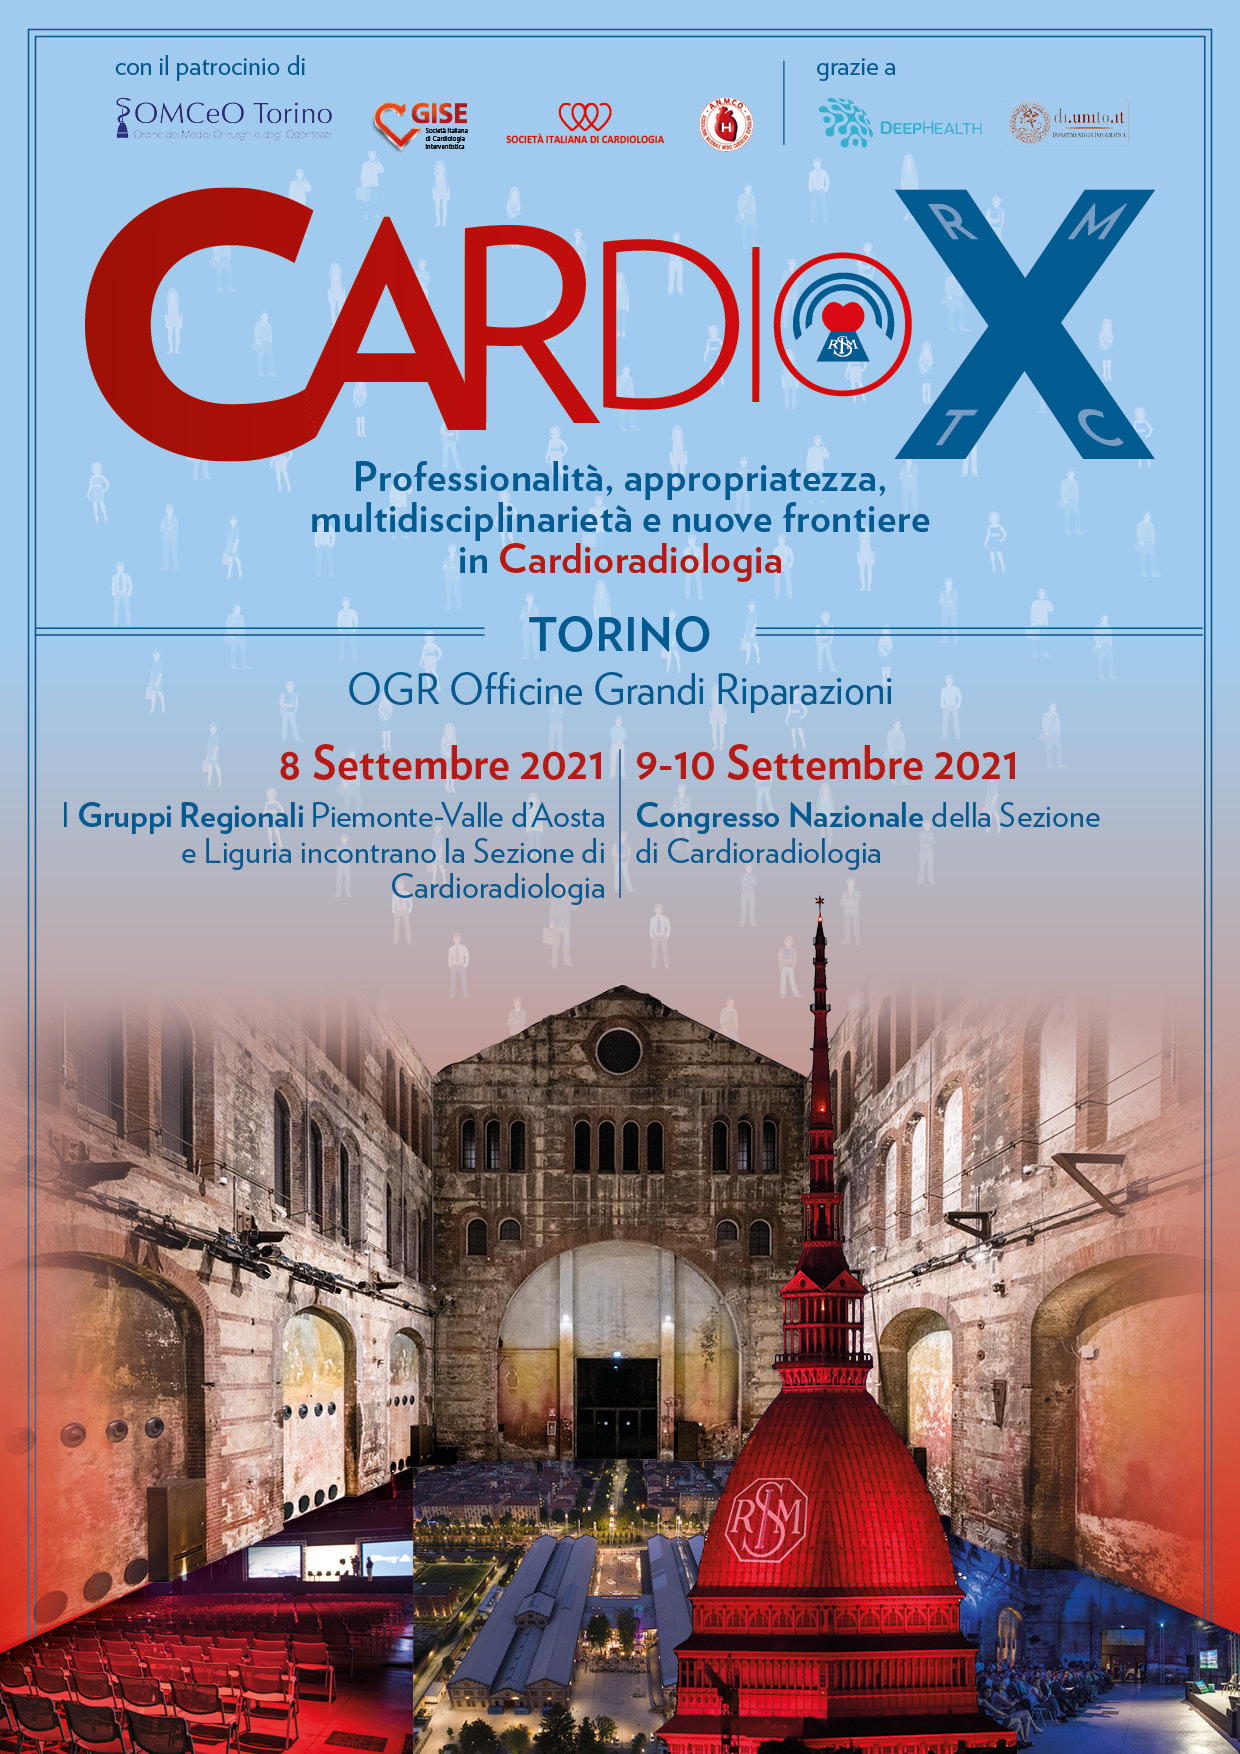 brochure CardioX1